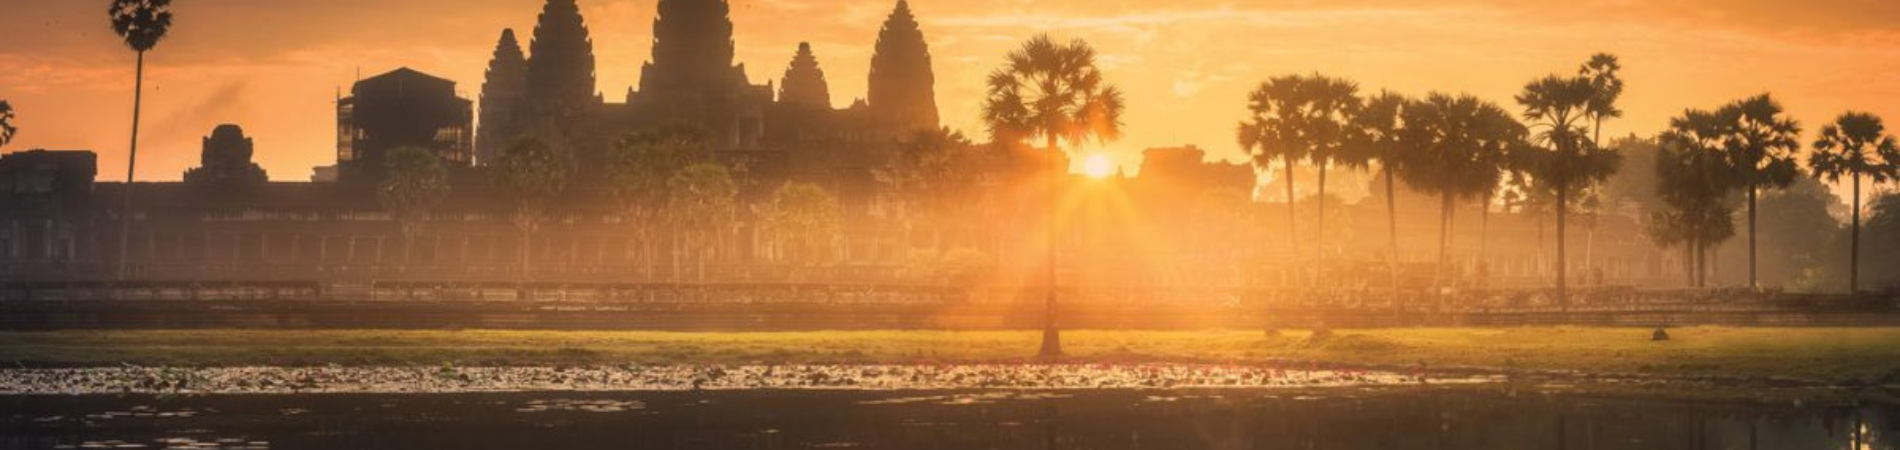 Cambodia Tour 4 Days from Phnom Penh